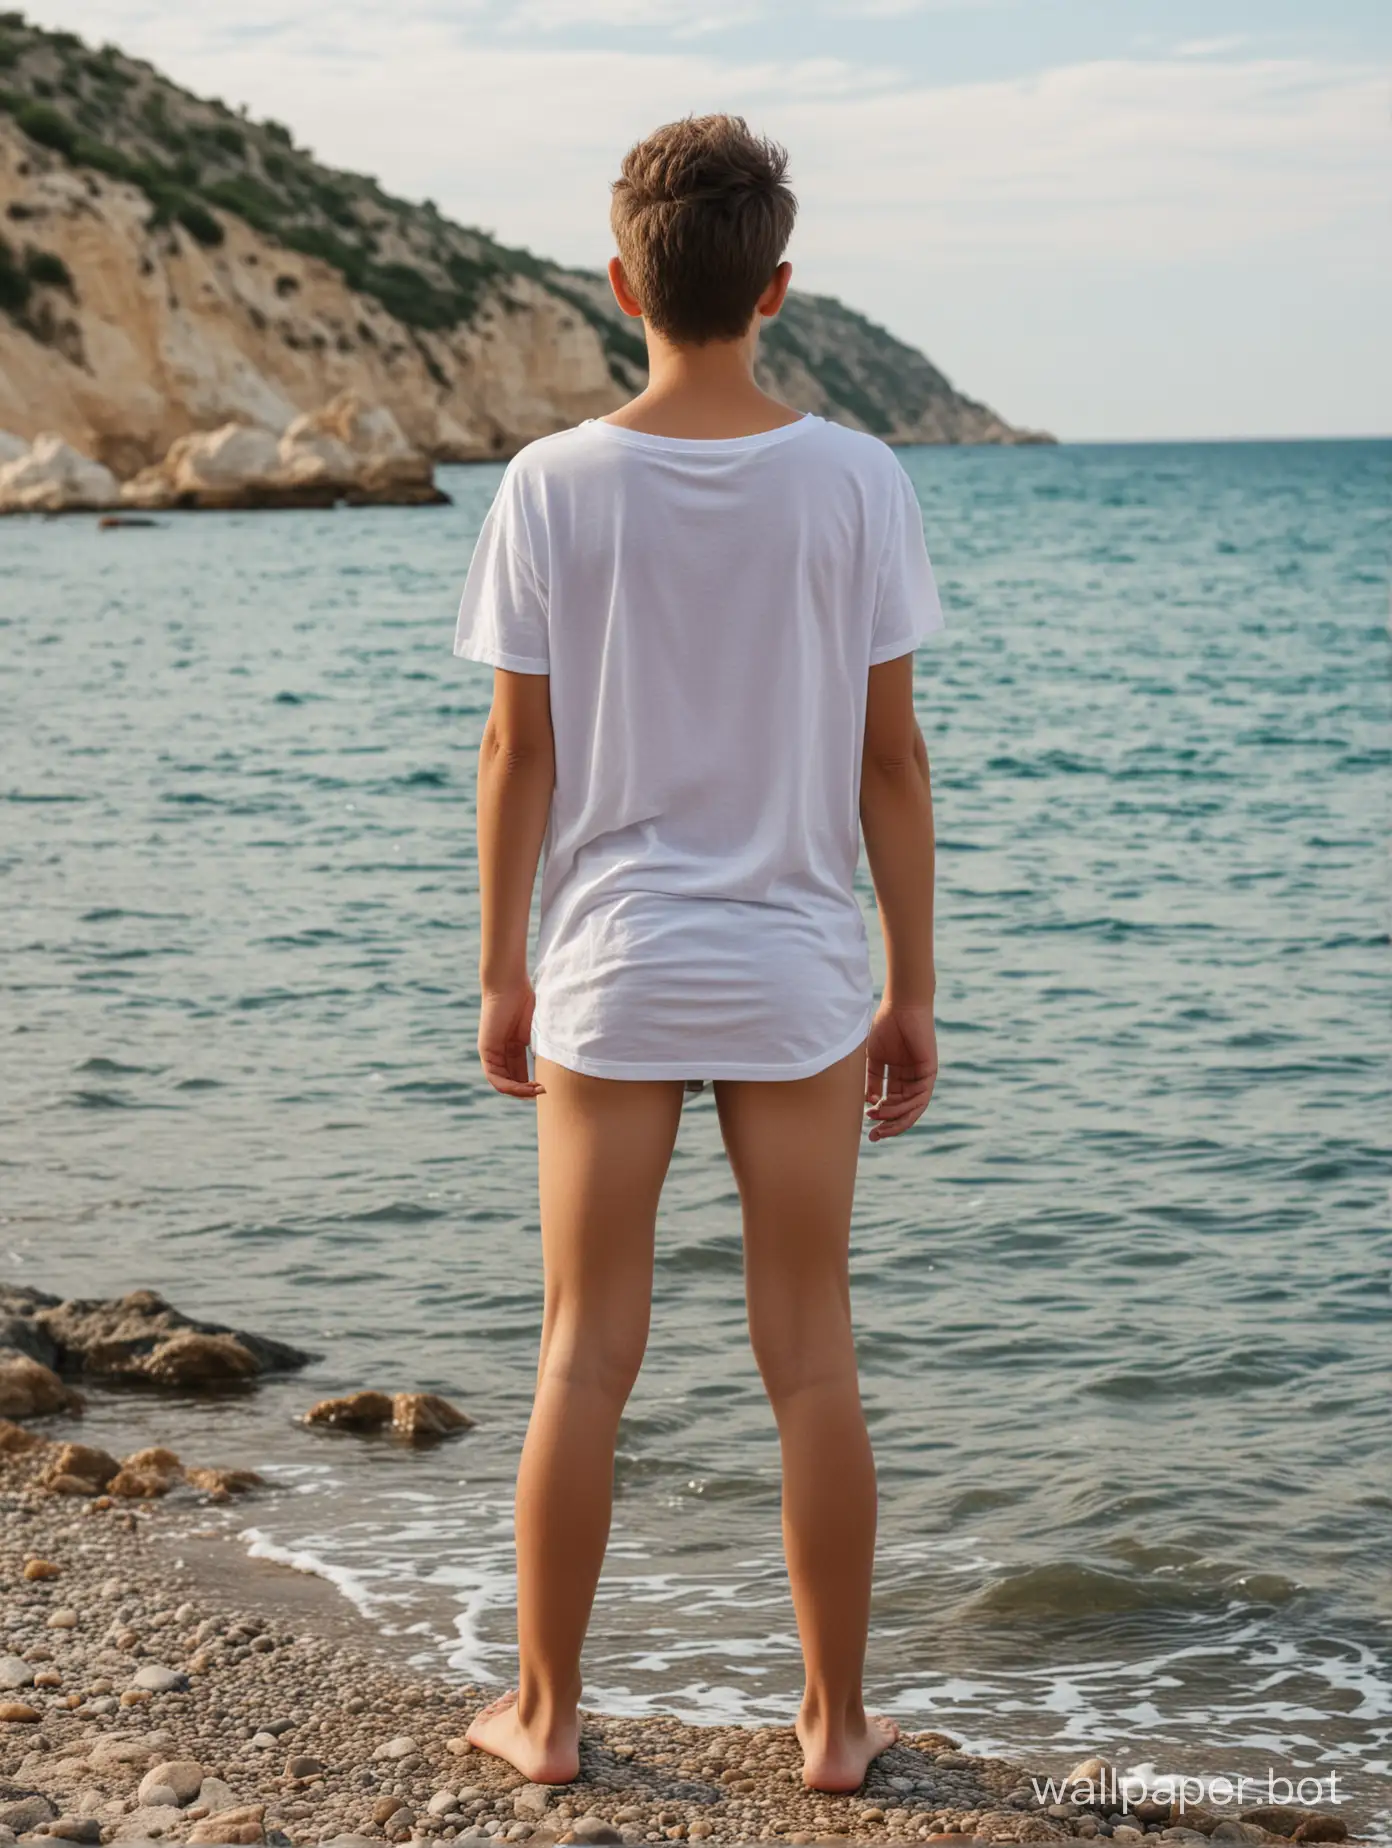 Youthful-Energy-13YearOld-Boy-in-TShirt-Embracing-Crimeas-Seaside